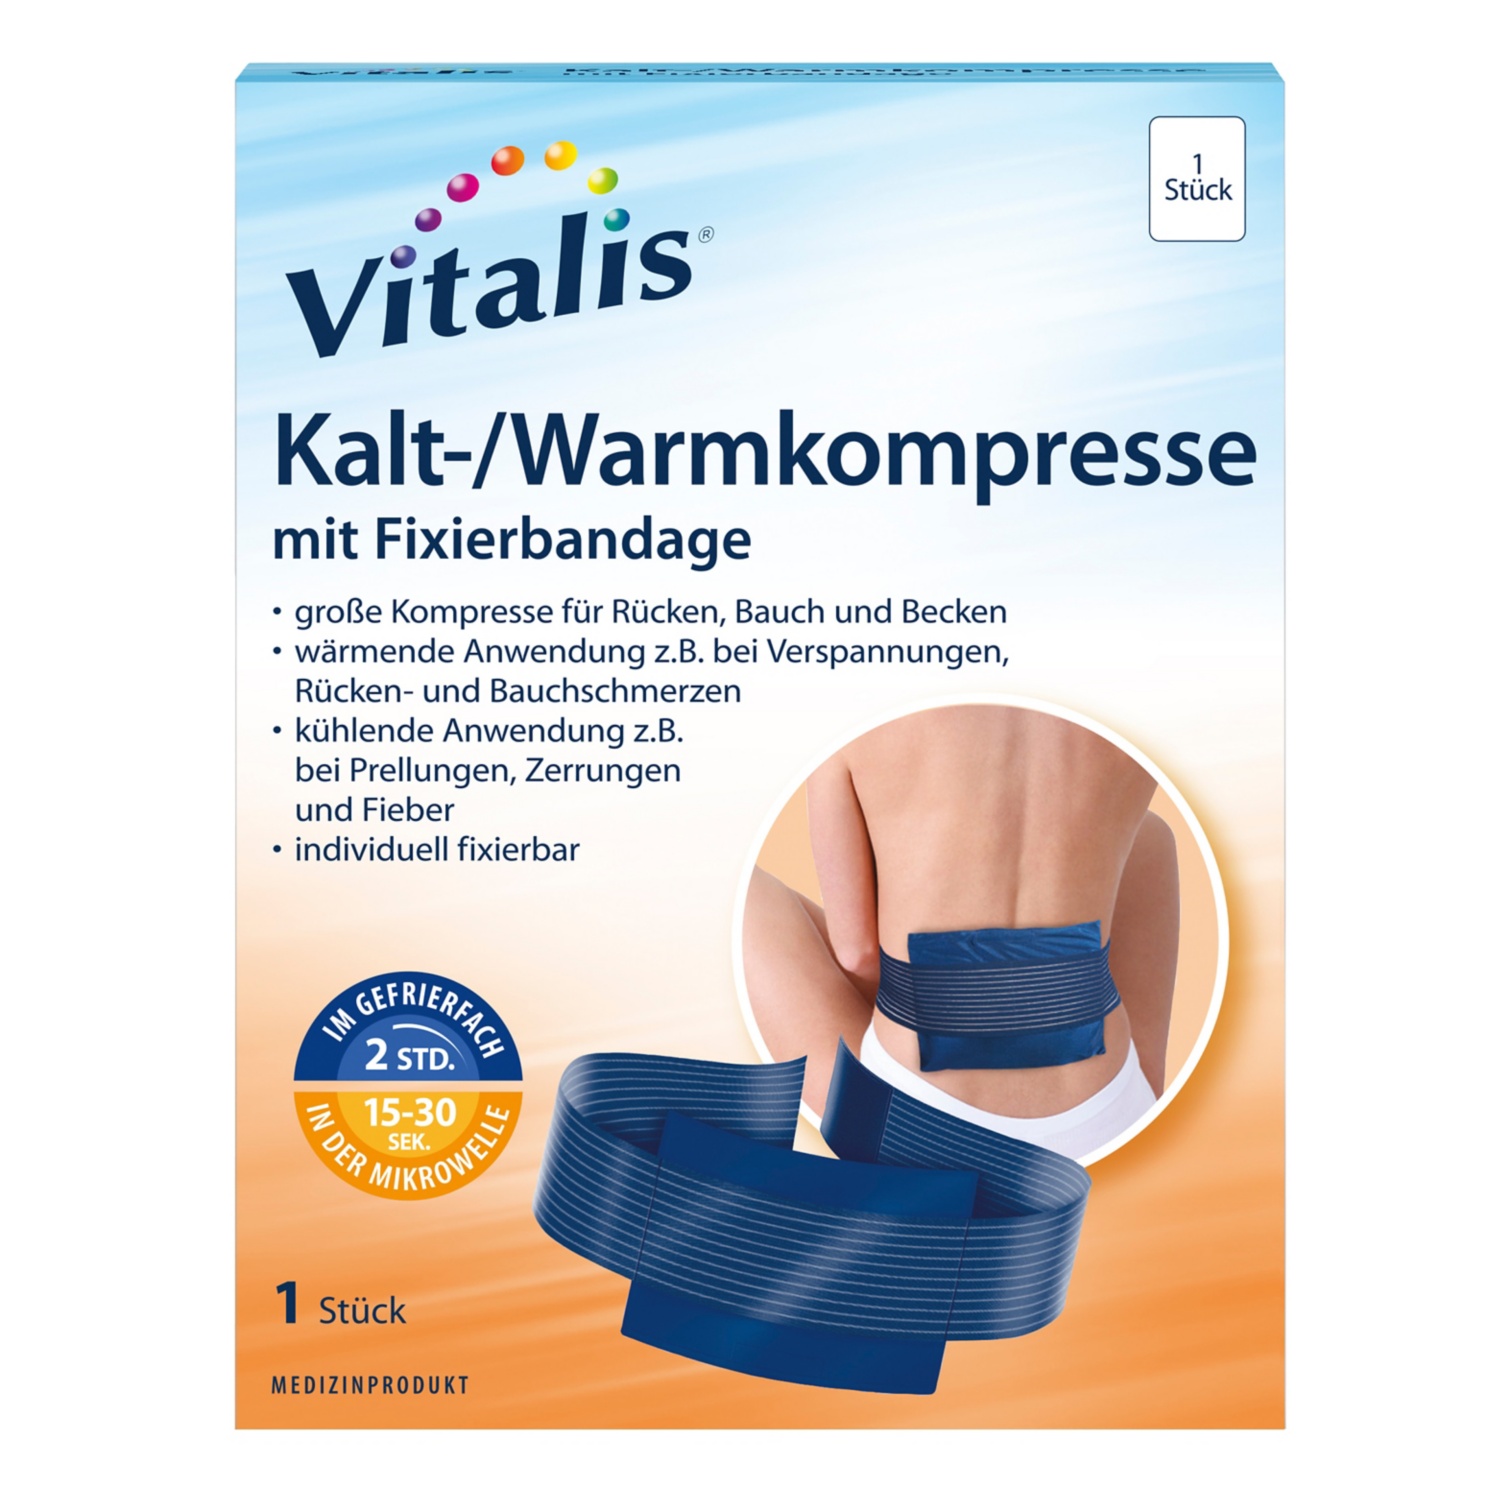 Vitalis® Kalt-/Warmkompresse mit Fixierbandage